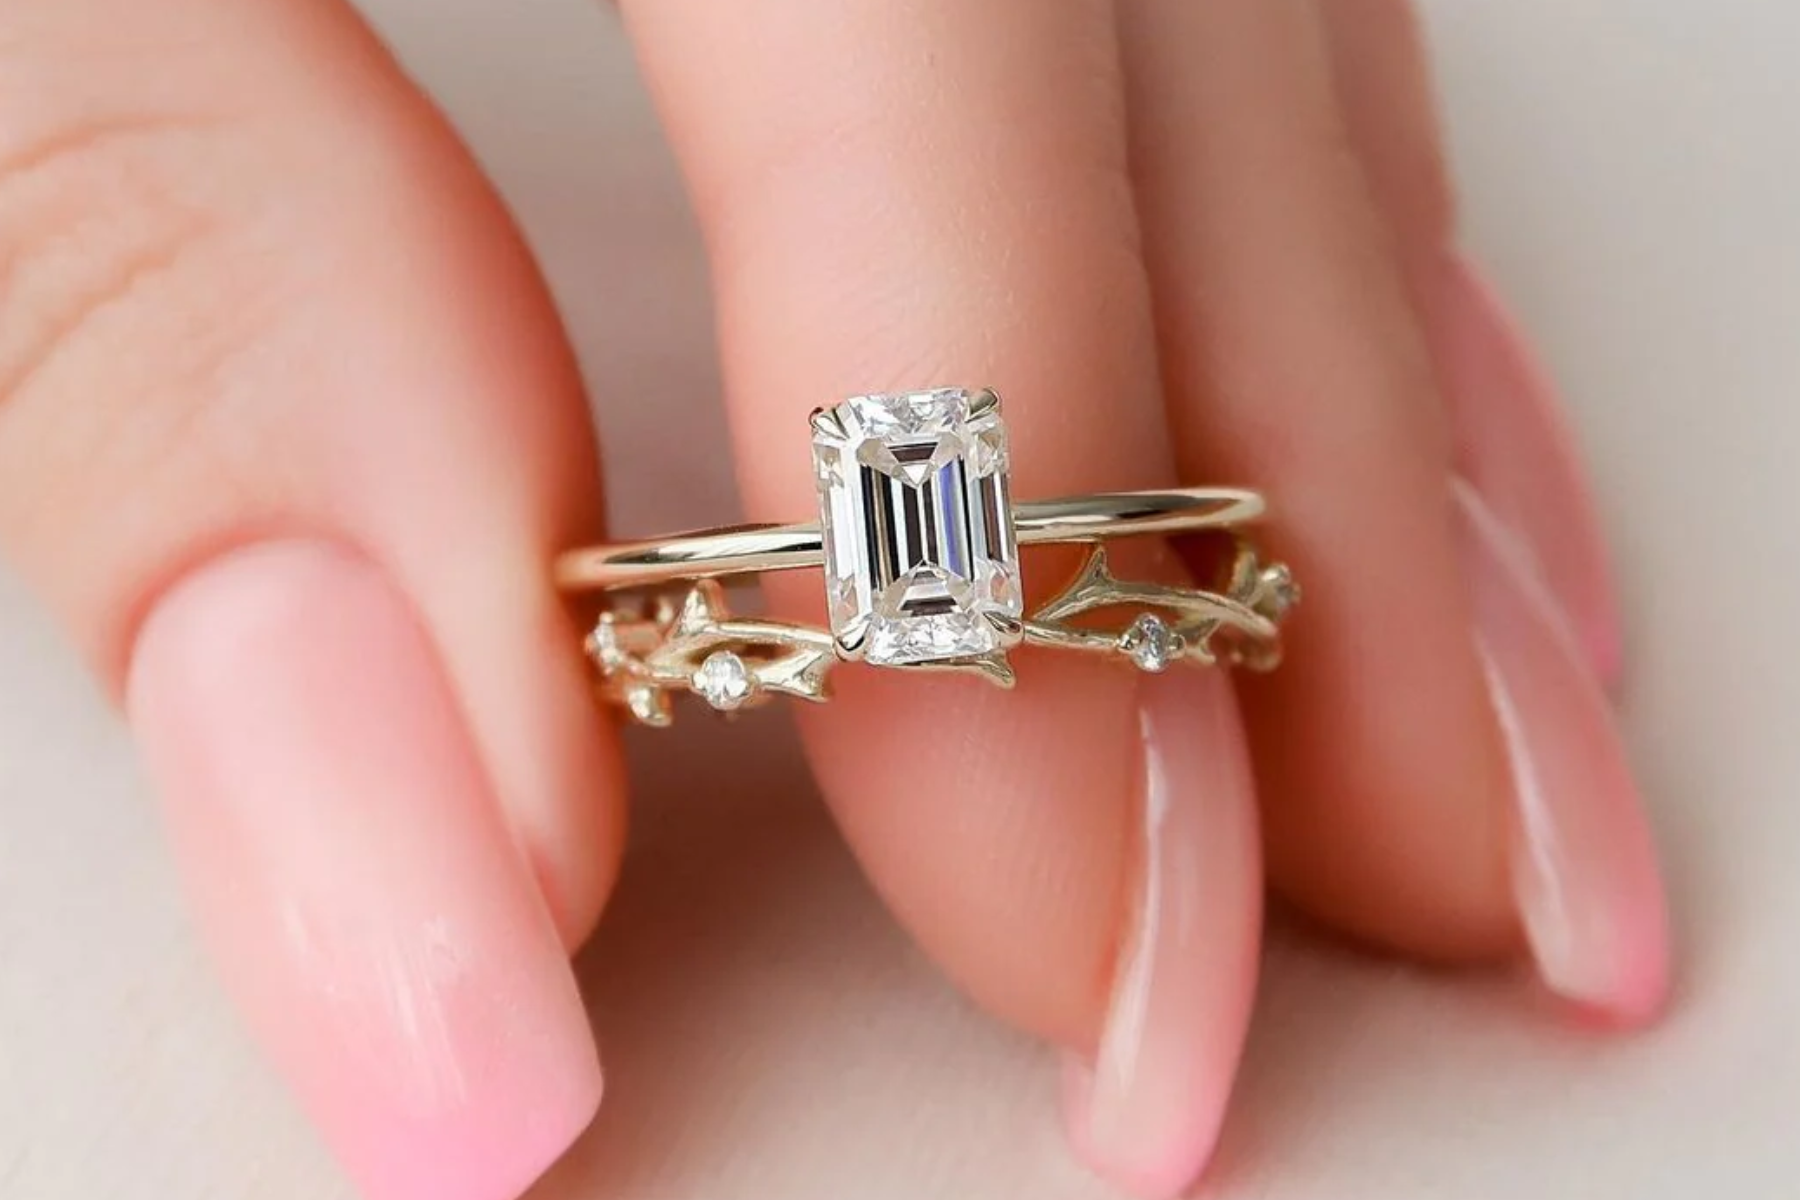 Emerald Cut Engagement Rings - A Popular Choice